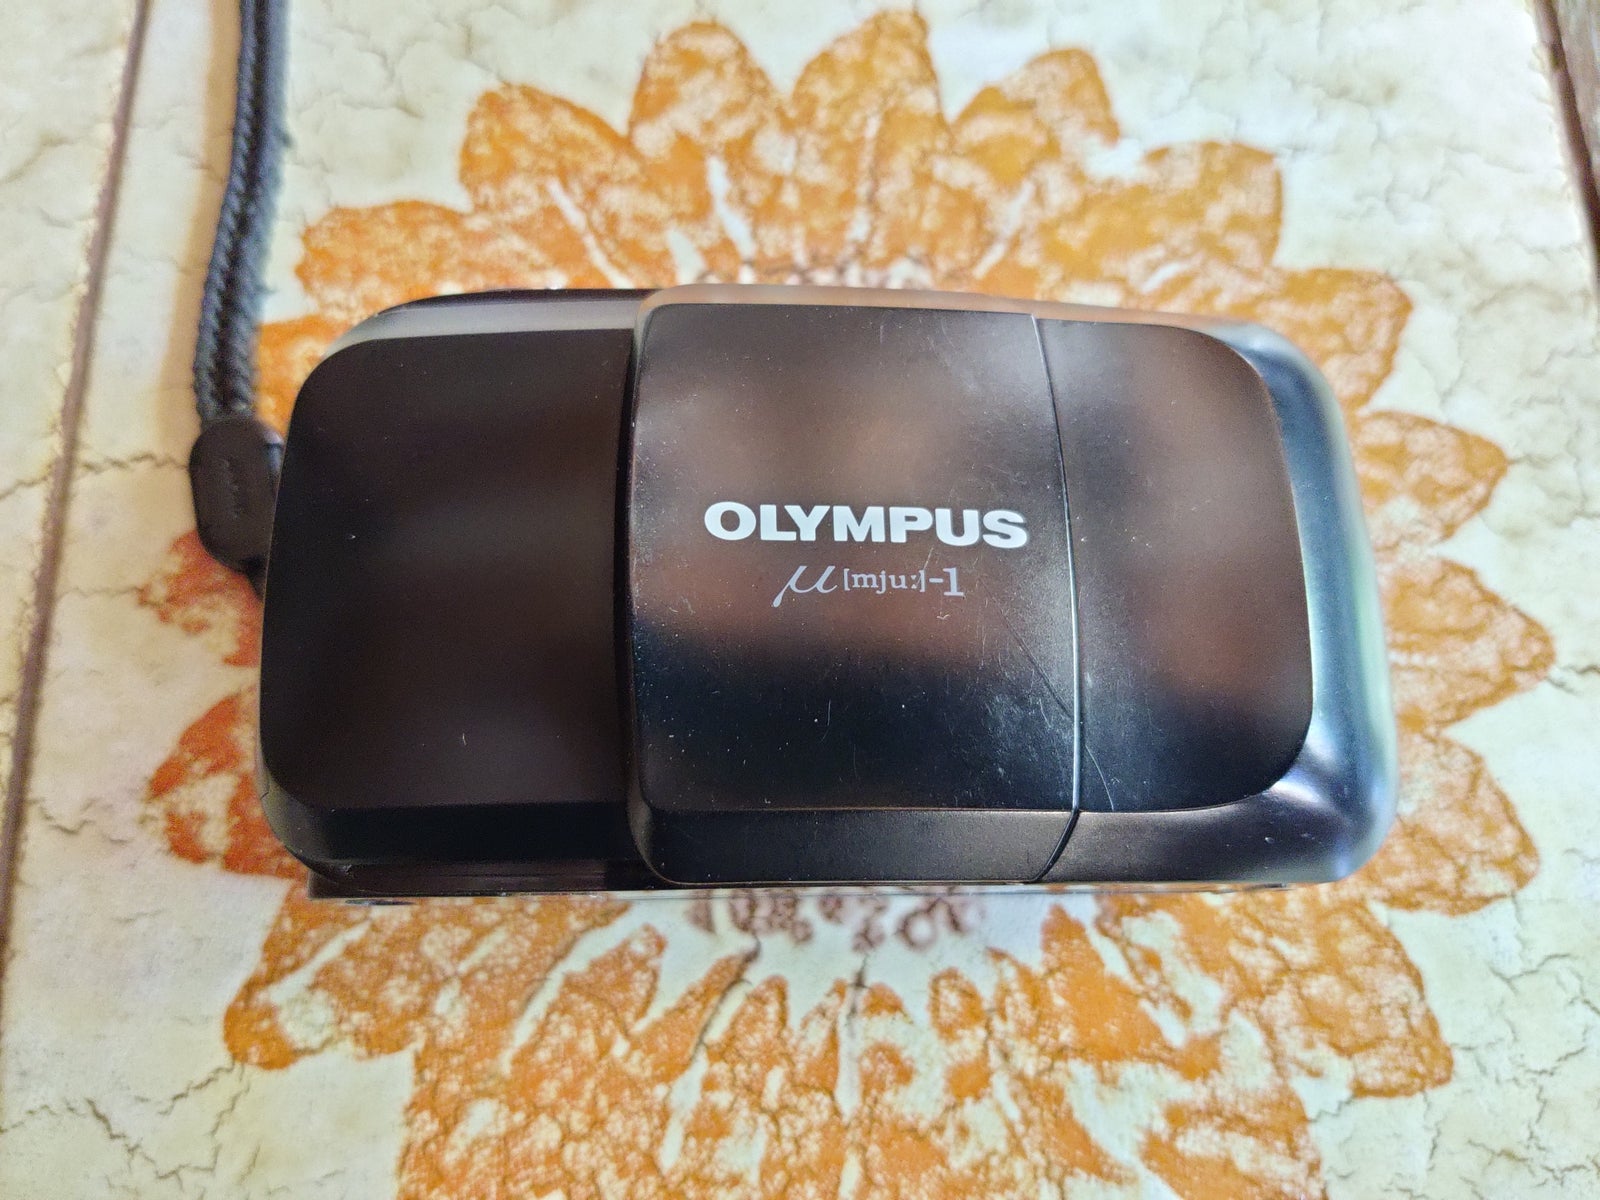 Olympus, Mju-1, Rimelig